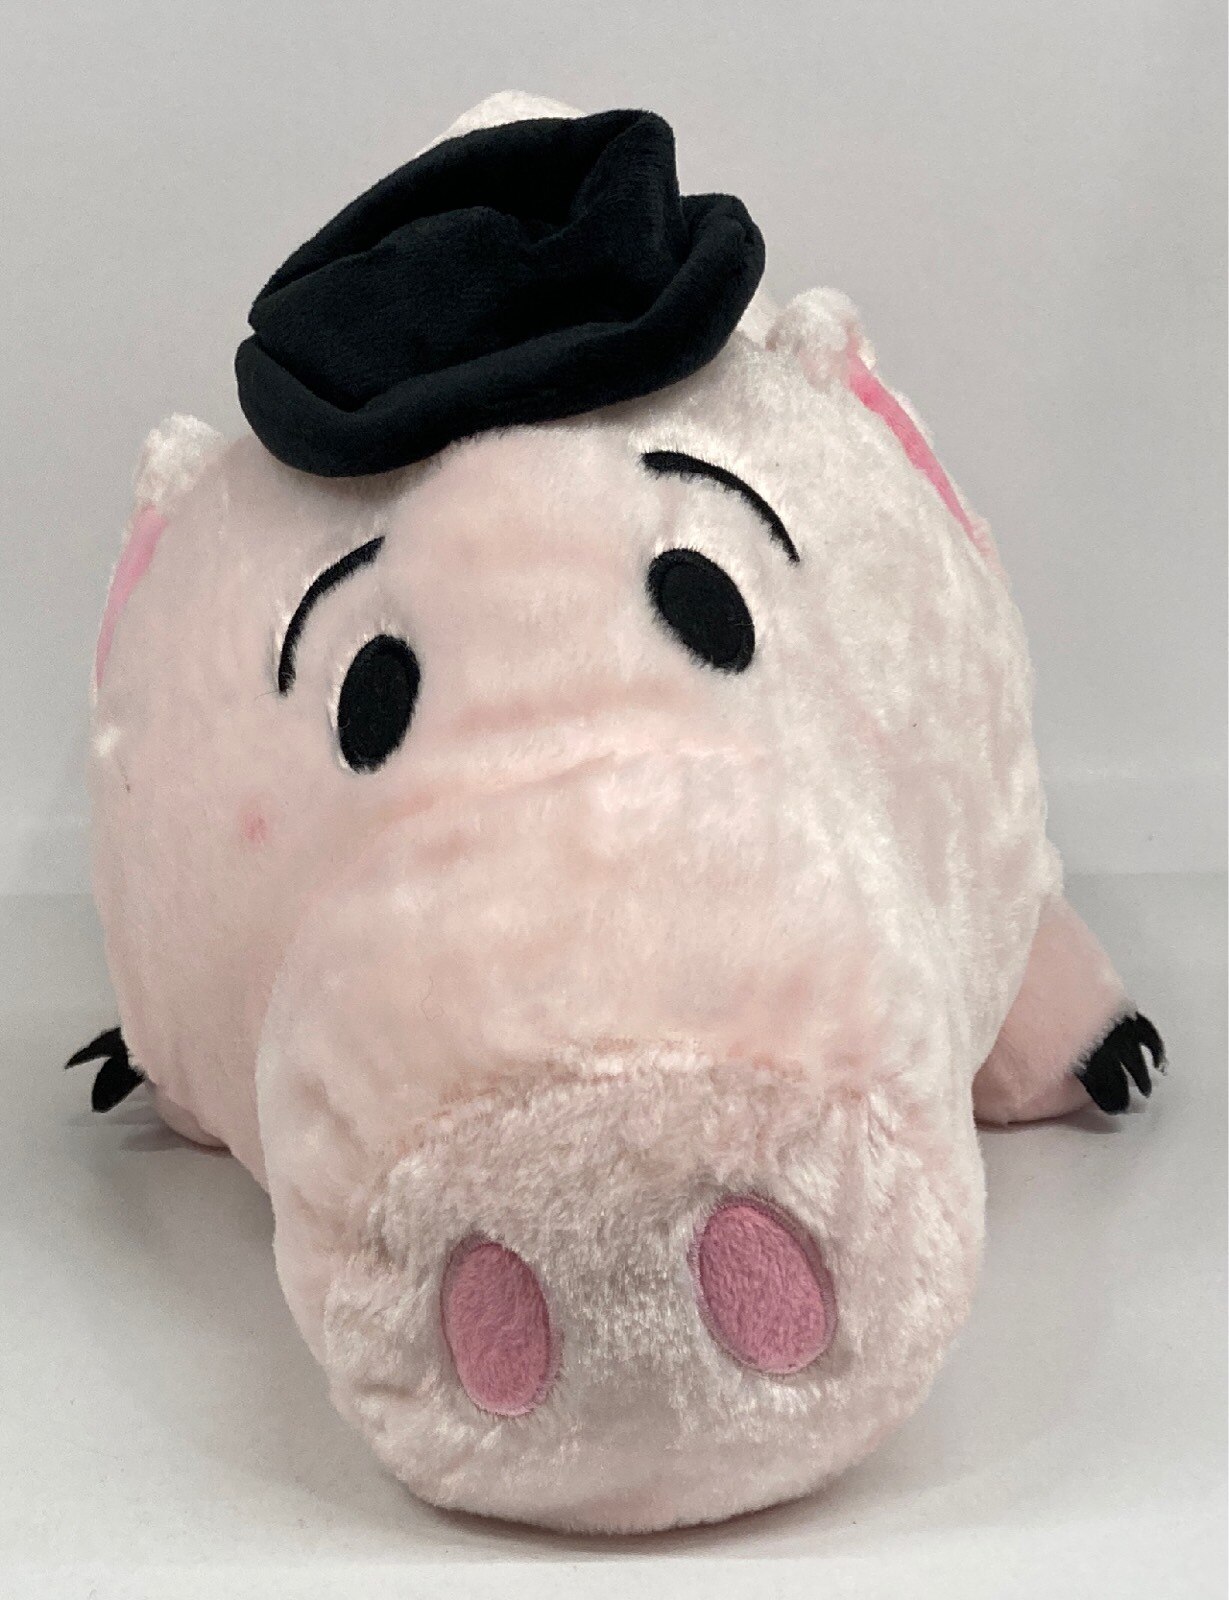 WIDE GRACE INTERNATIONAL Plush Stuffed Toy Doctor Pork Chop Toy Story  Mandarake Online Shop